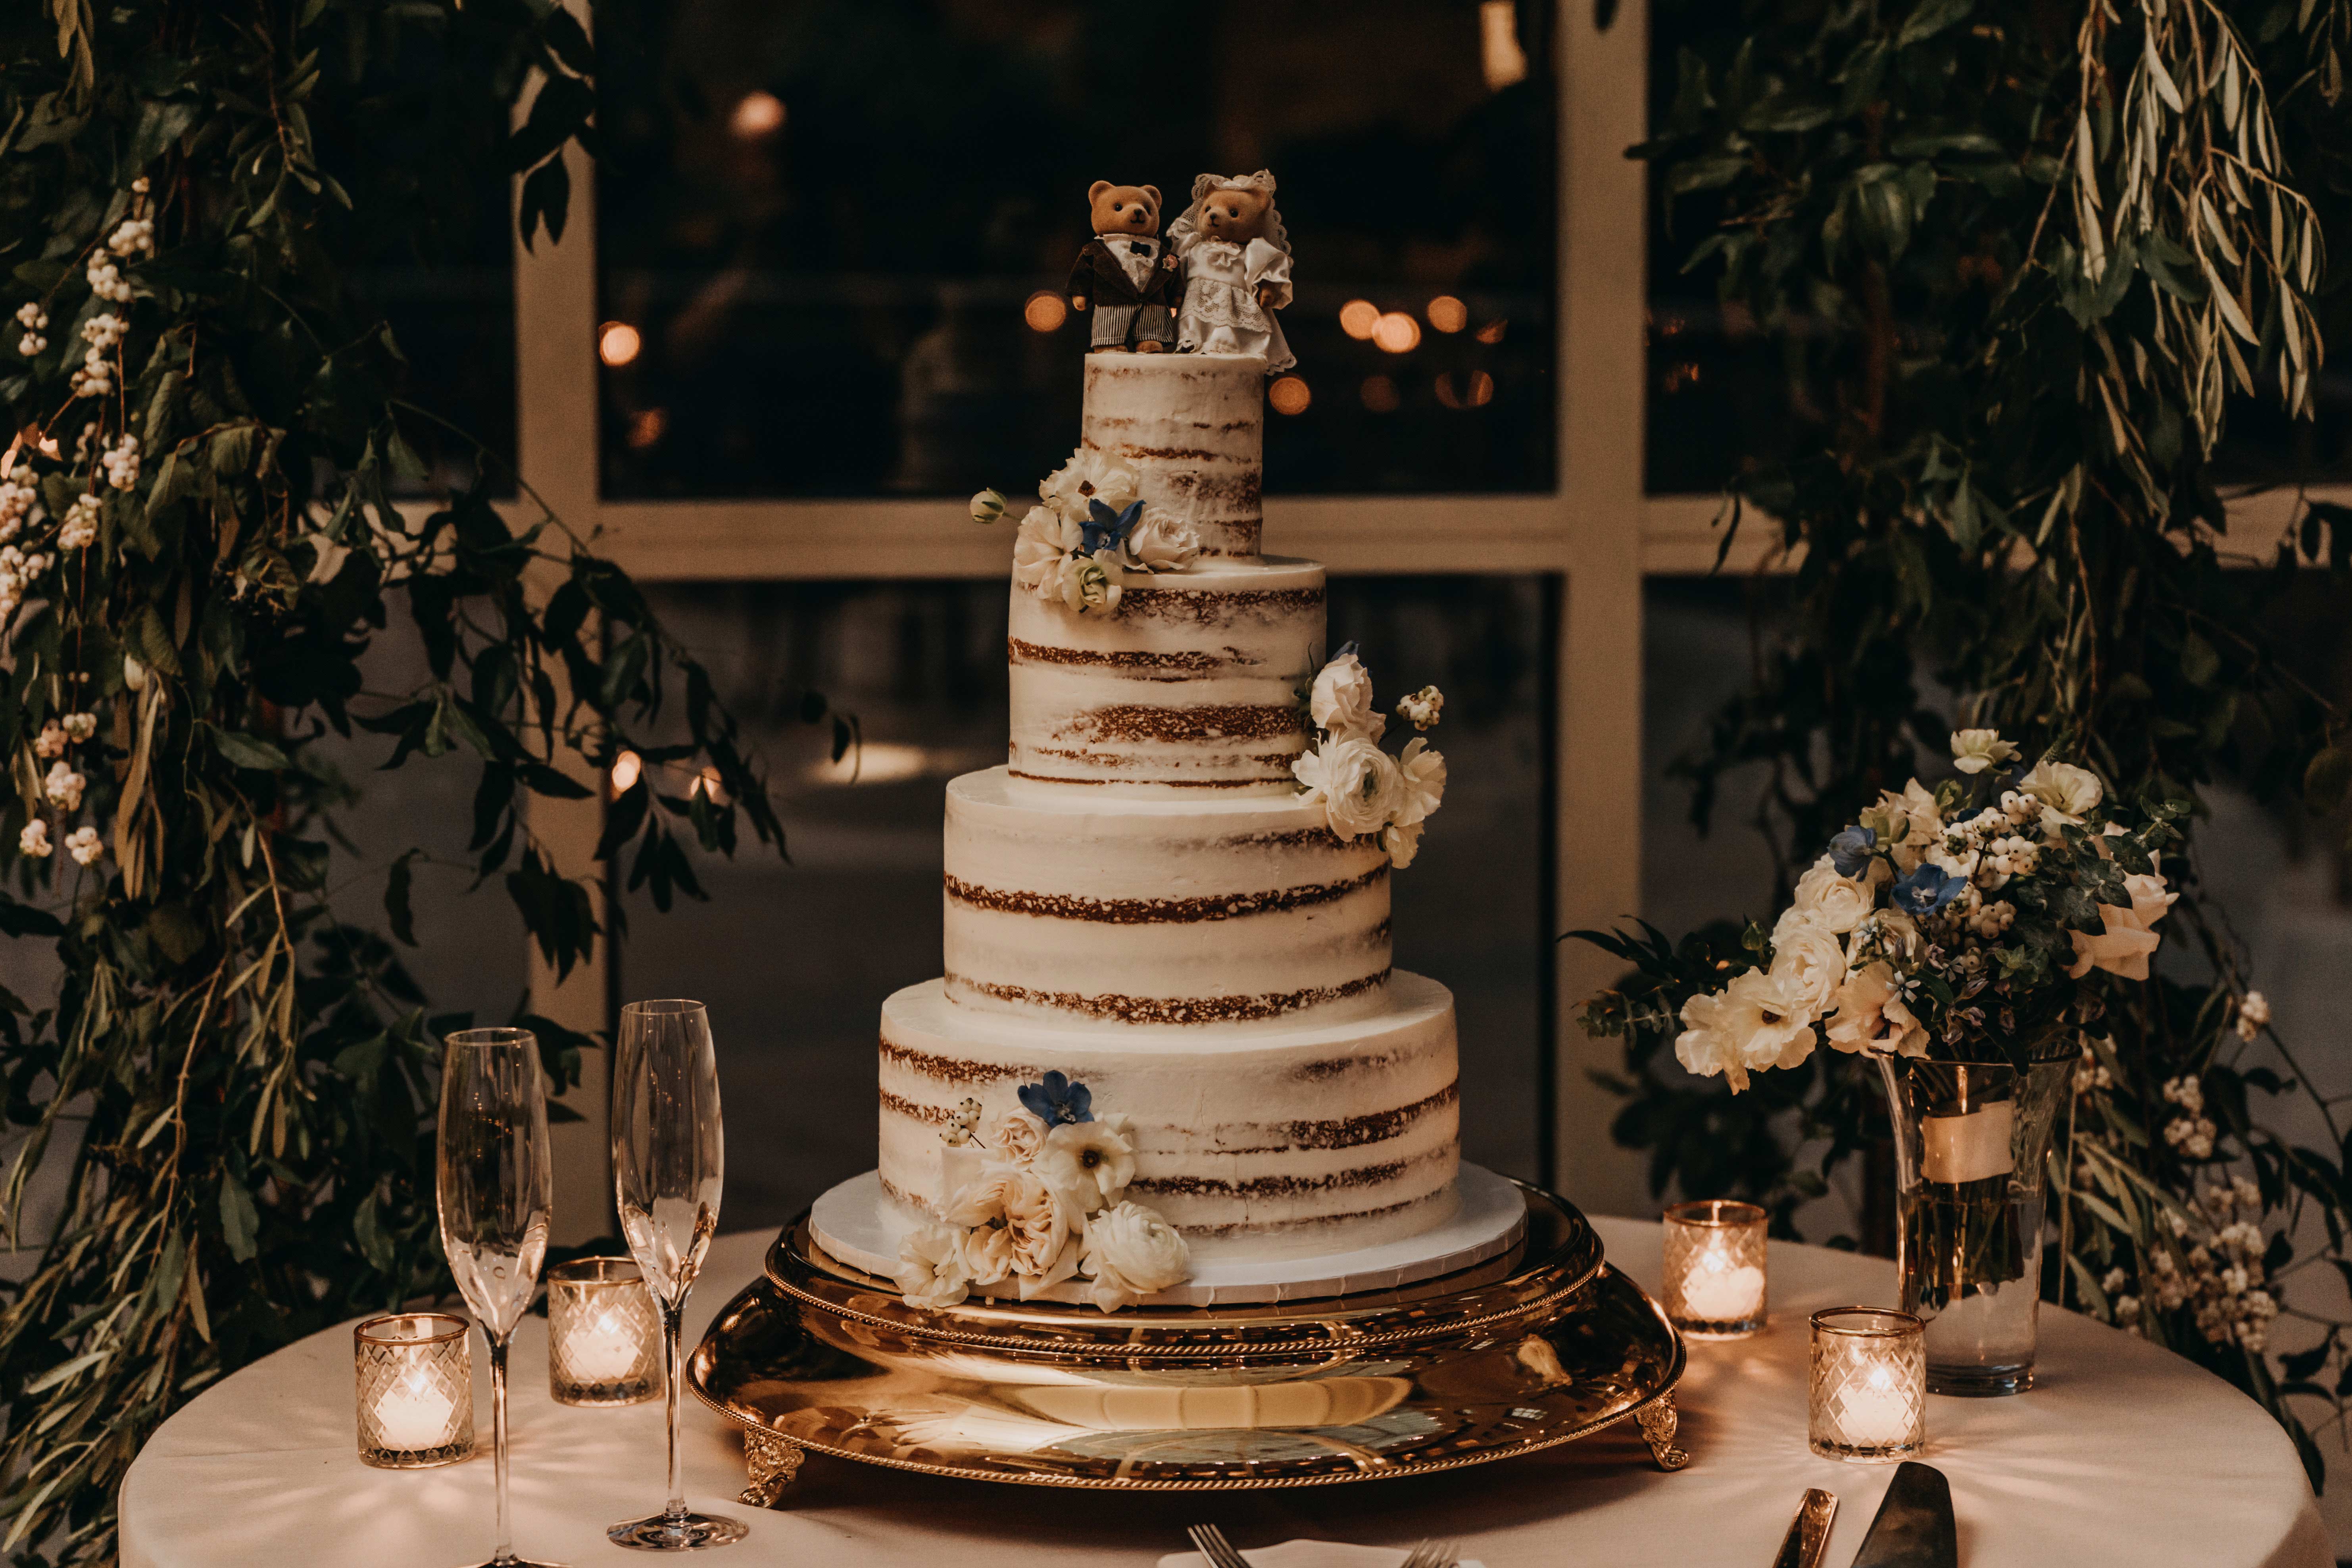 Three Creative and Delicious Wedding Cake Ideas